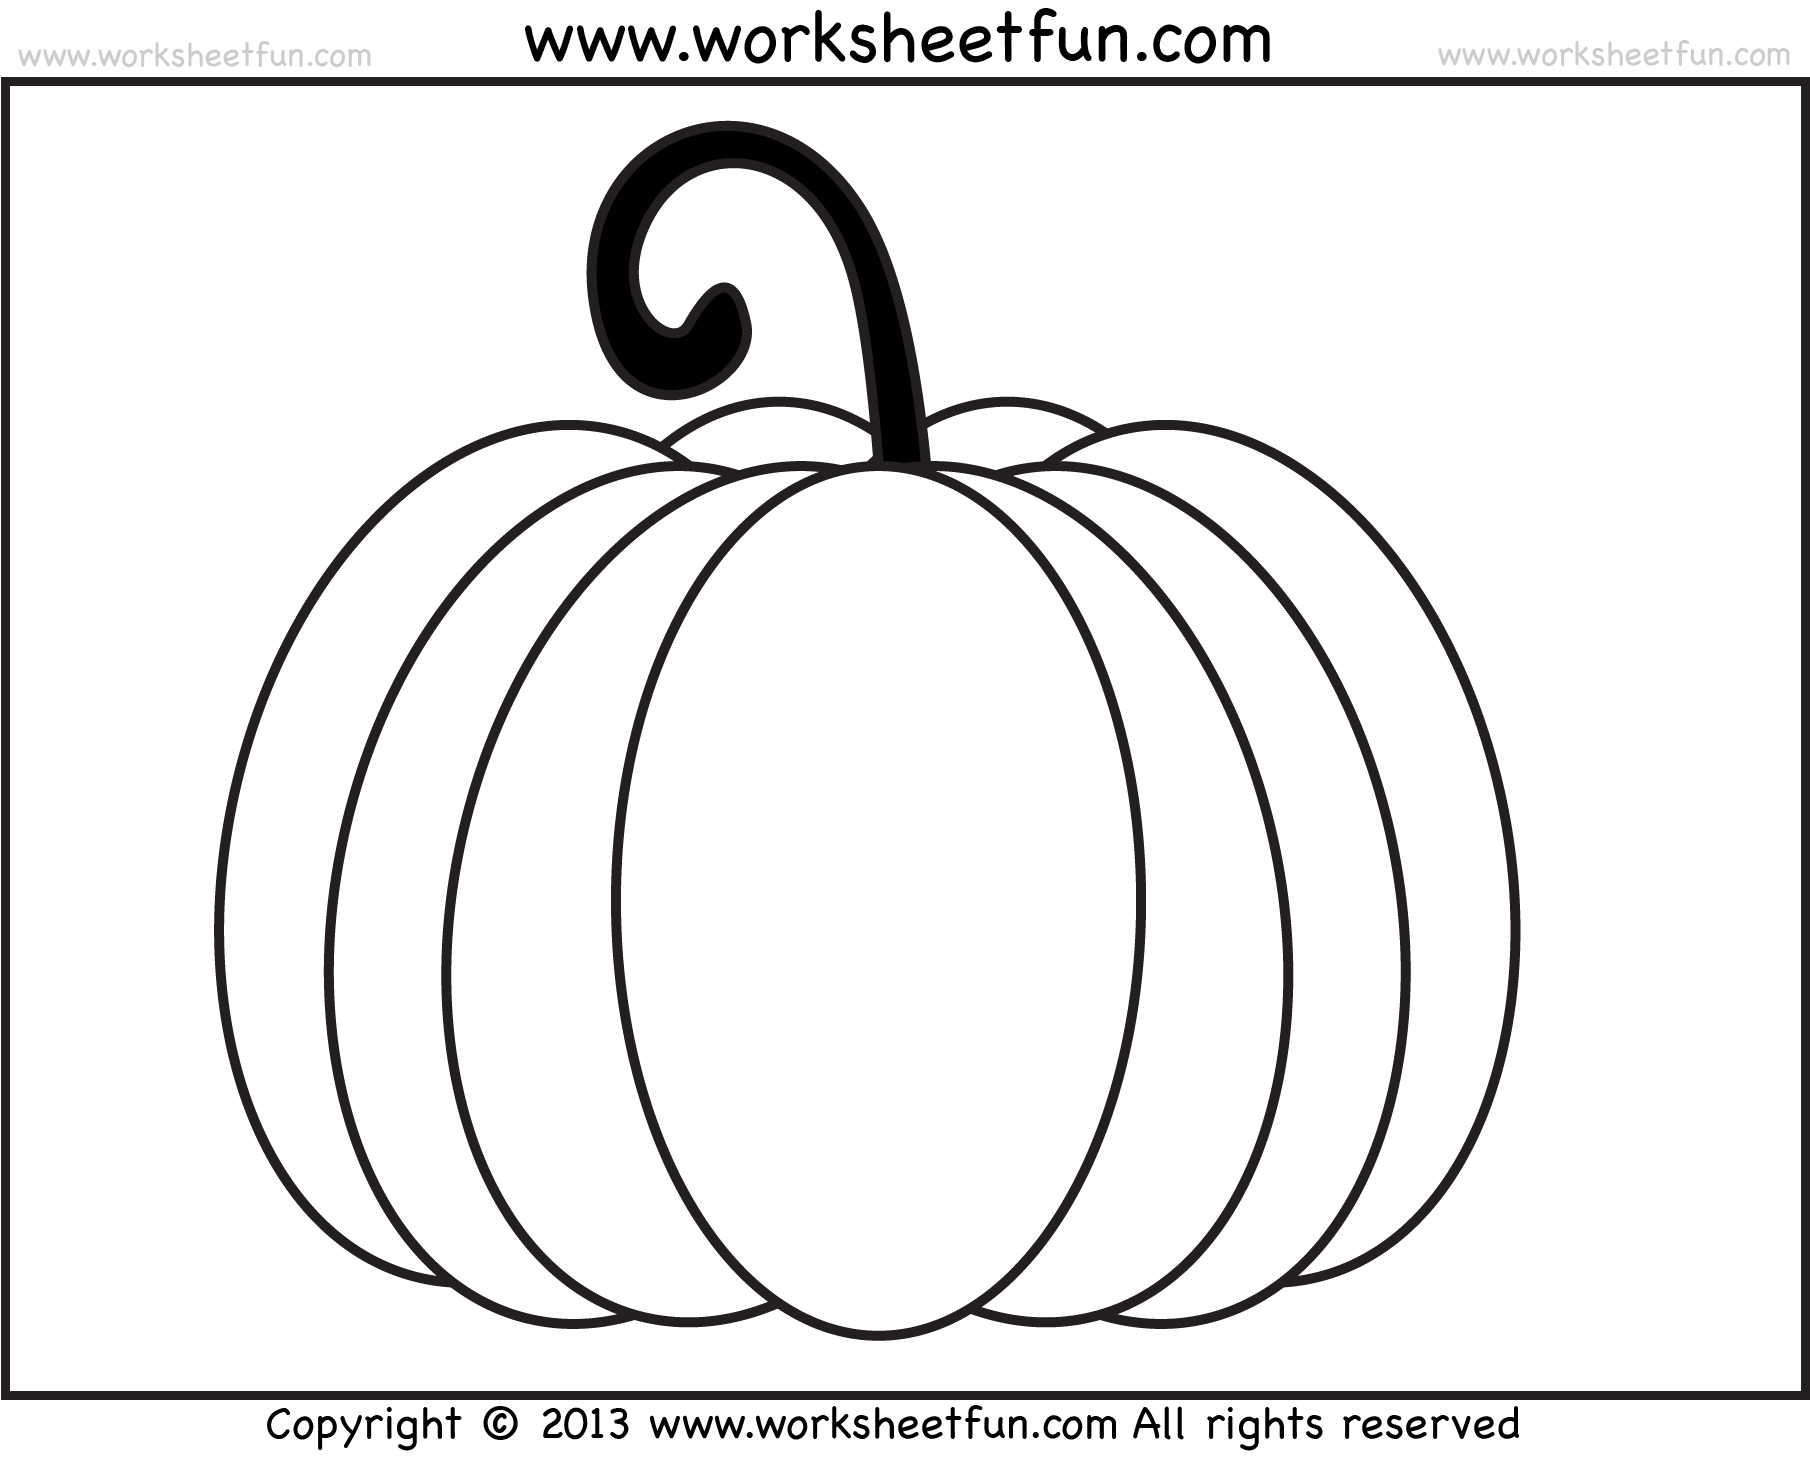 pumpkin-coloring-3-worksheets-free-printable-worksheets-worksheetfun